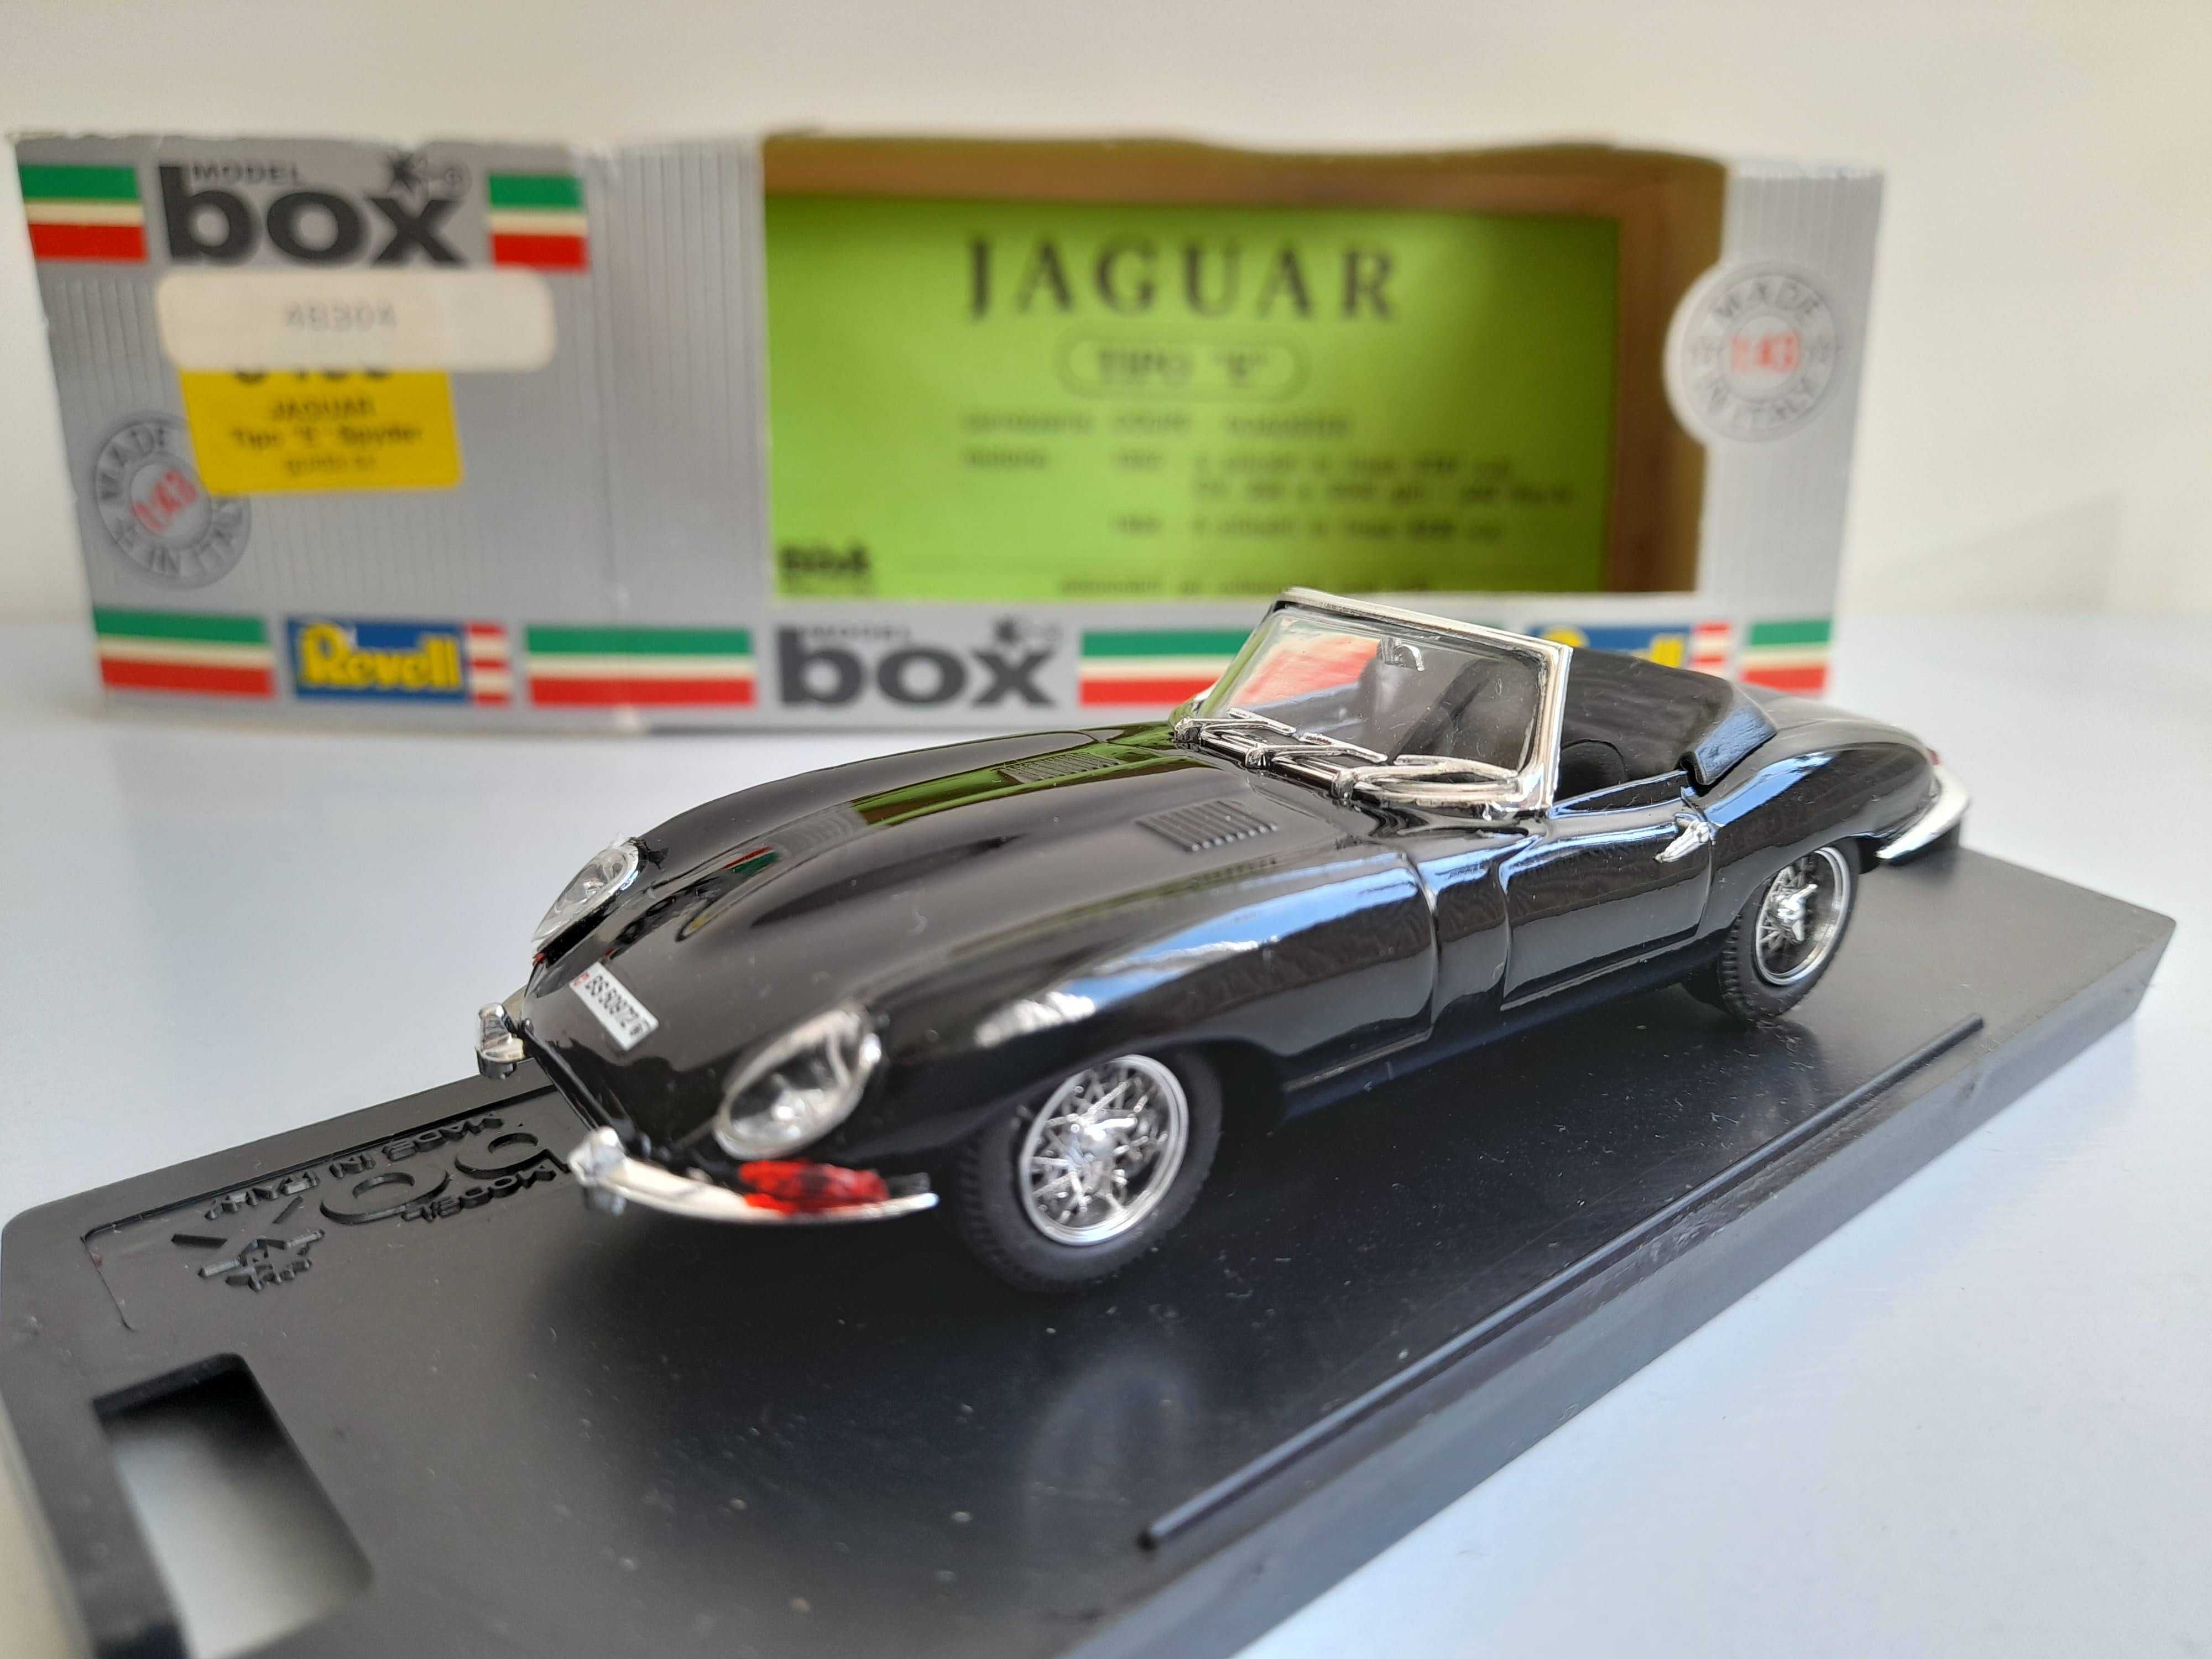 Model Box czarny Jaguar Tipo E Spyder 1:43 Revell do kolekcji